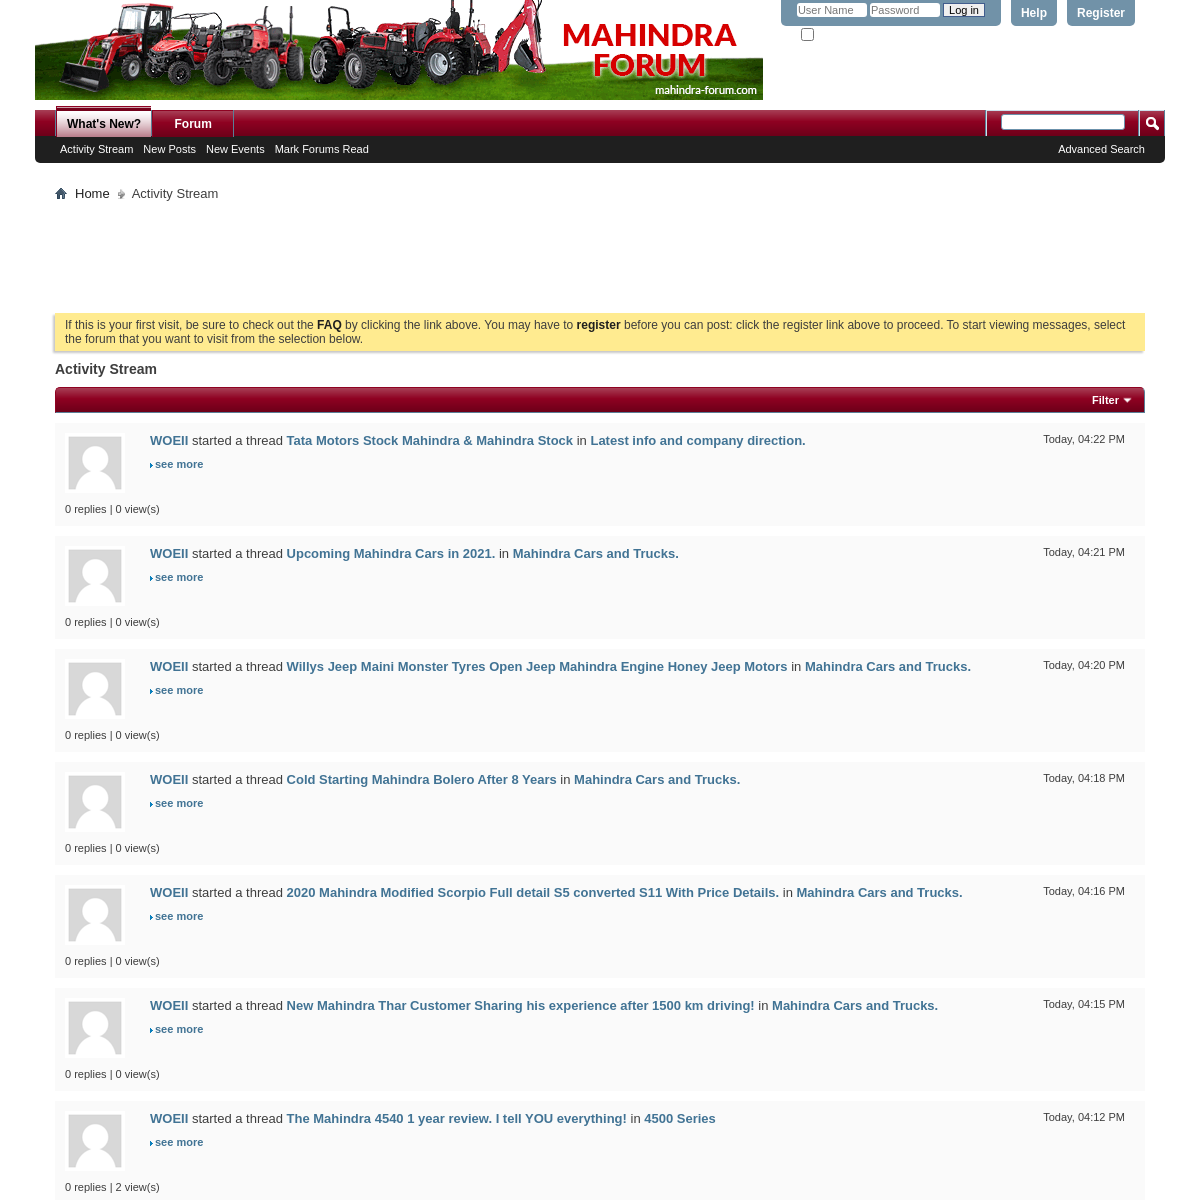 A complete backup of mahindra-forum.com